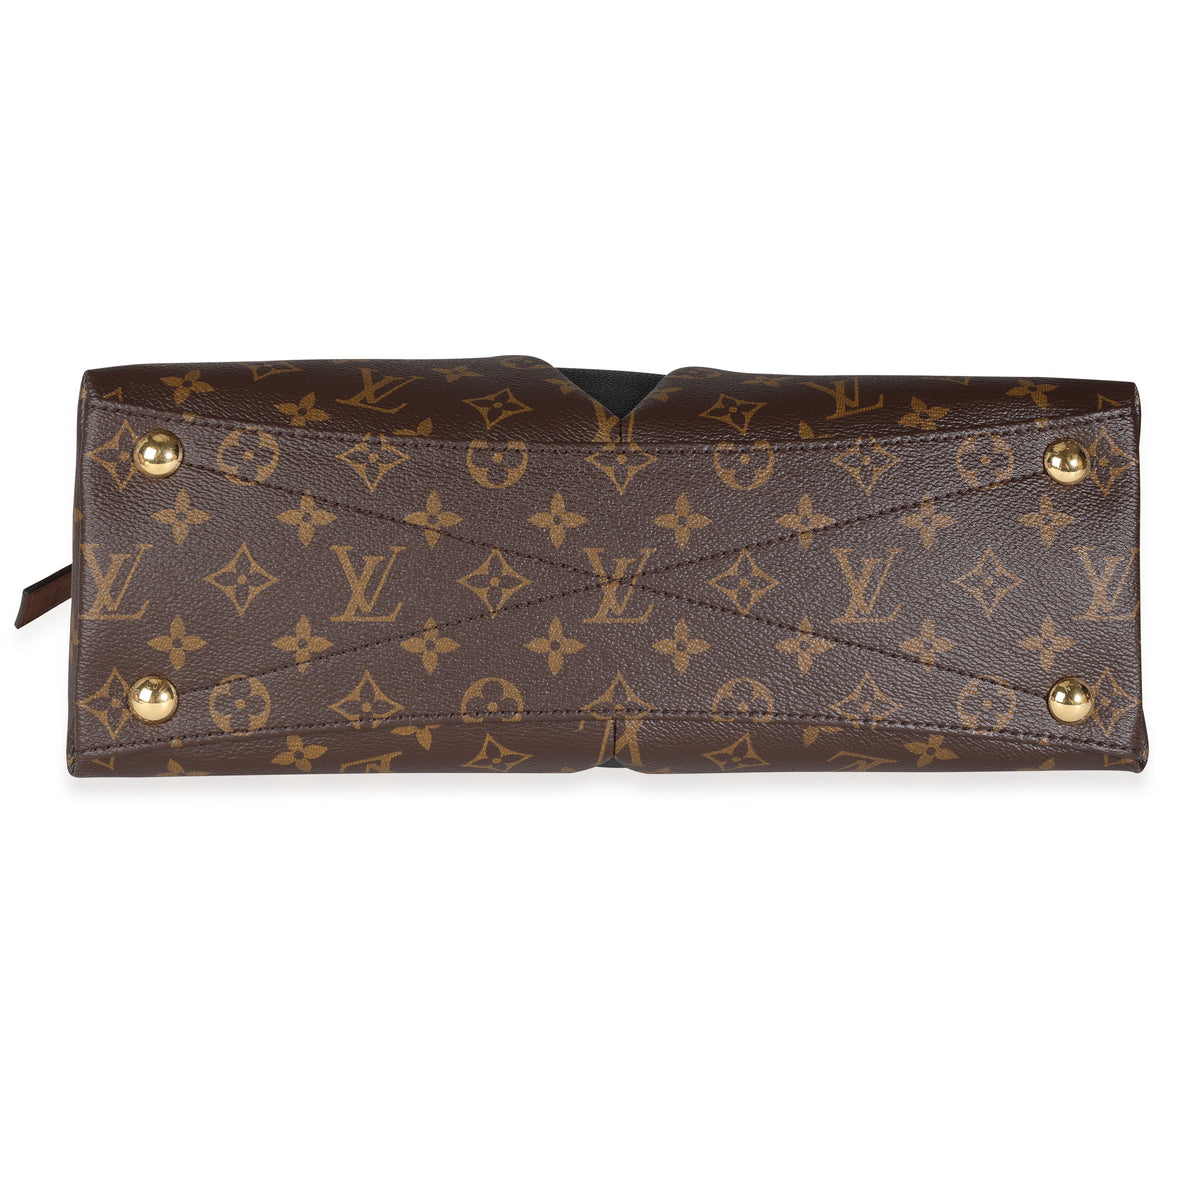 Louis Vuitton V Tote Bag Monogram now on luxeitfwd.com.au